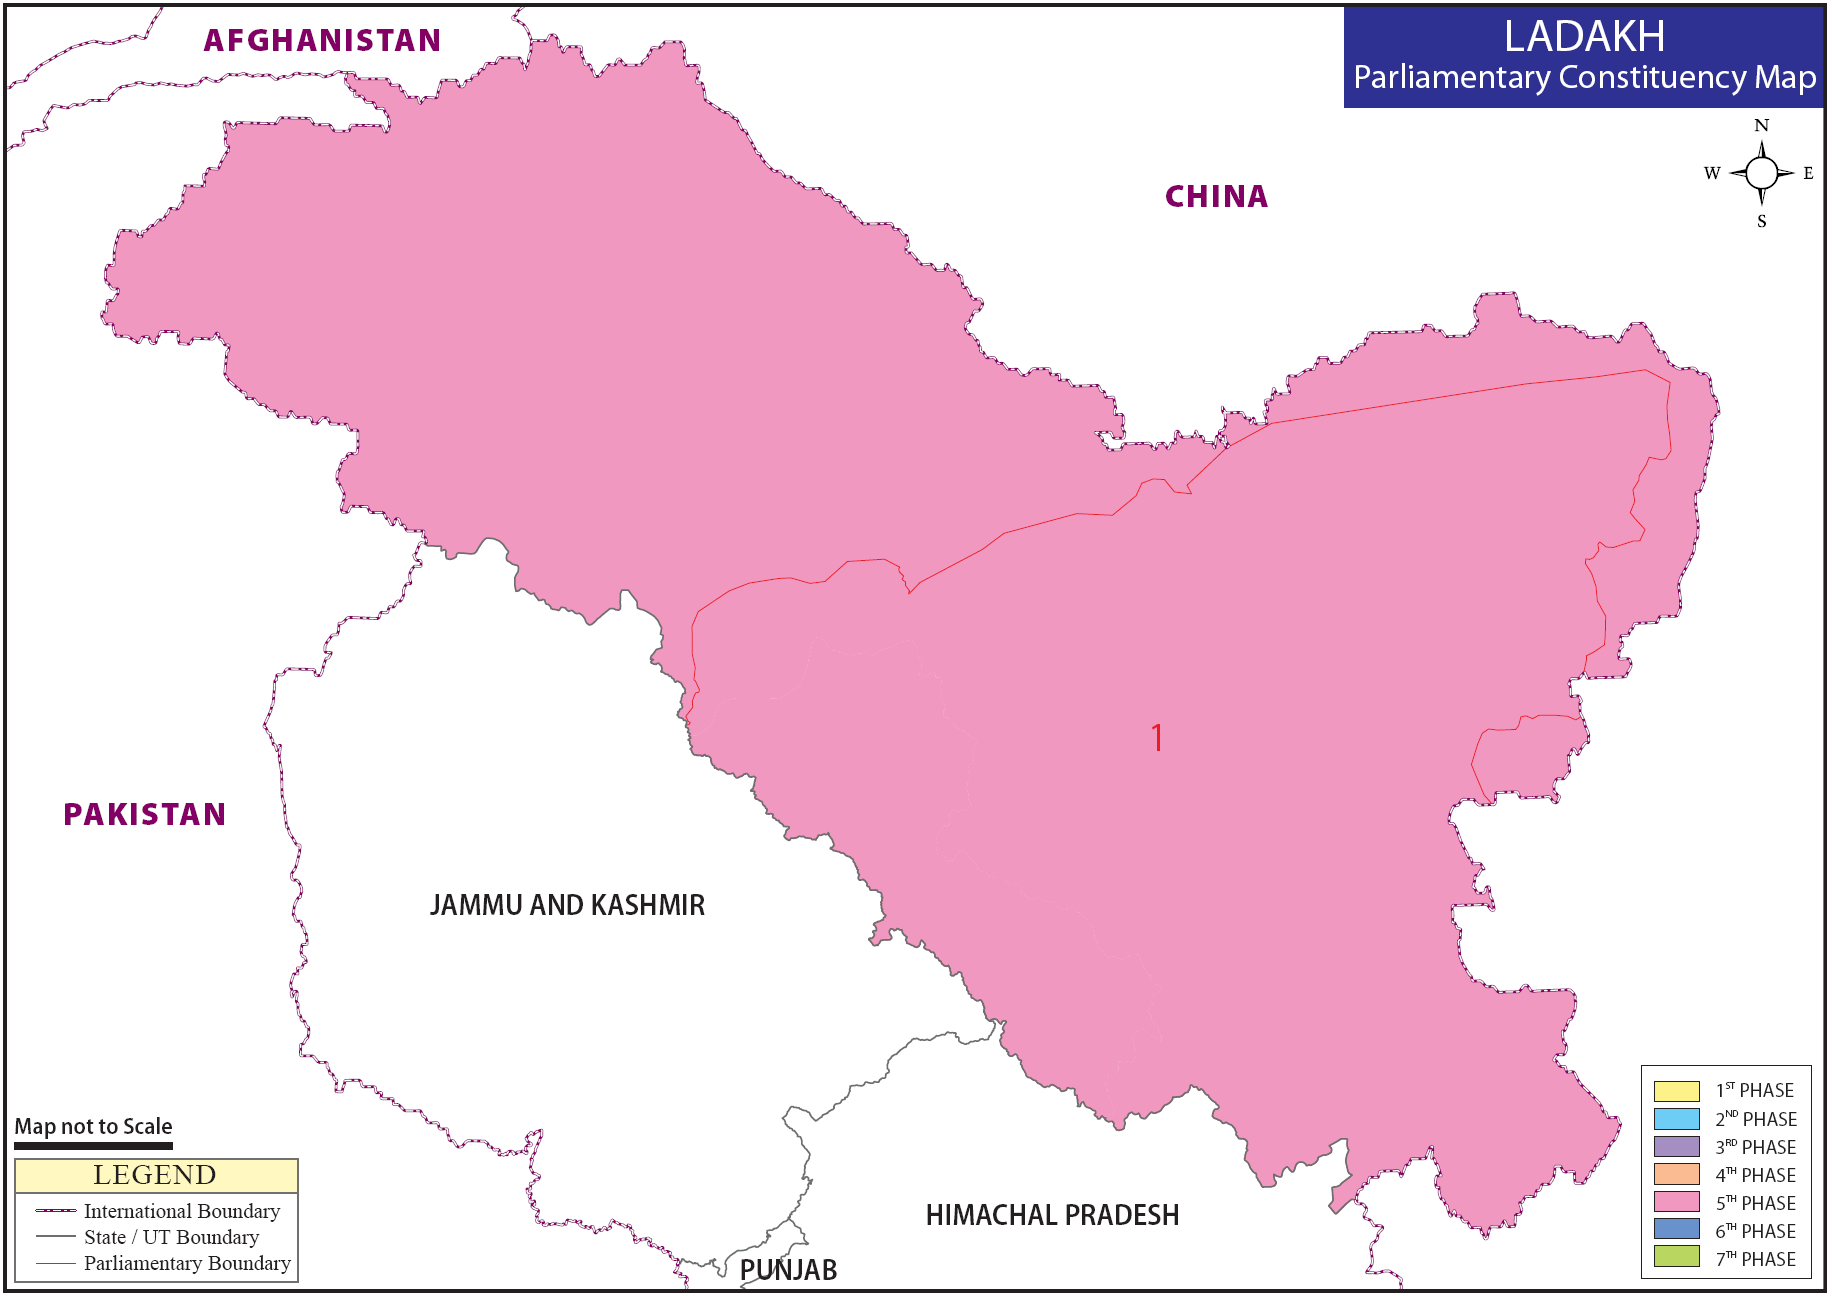 Ladakh Parliamentary Constituency Map